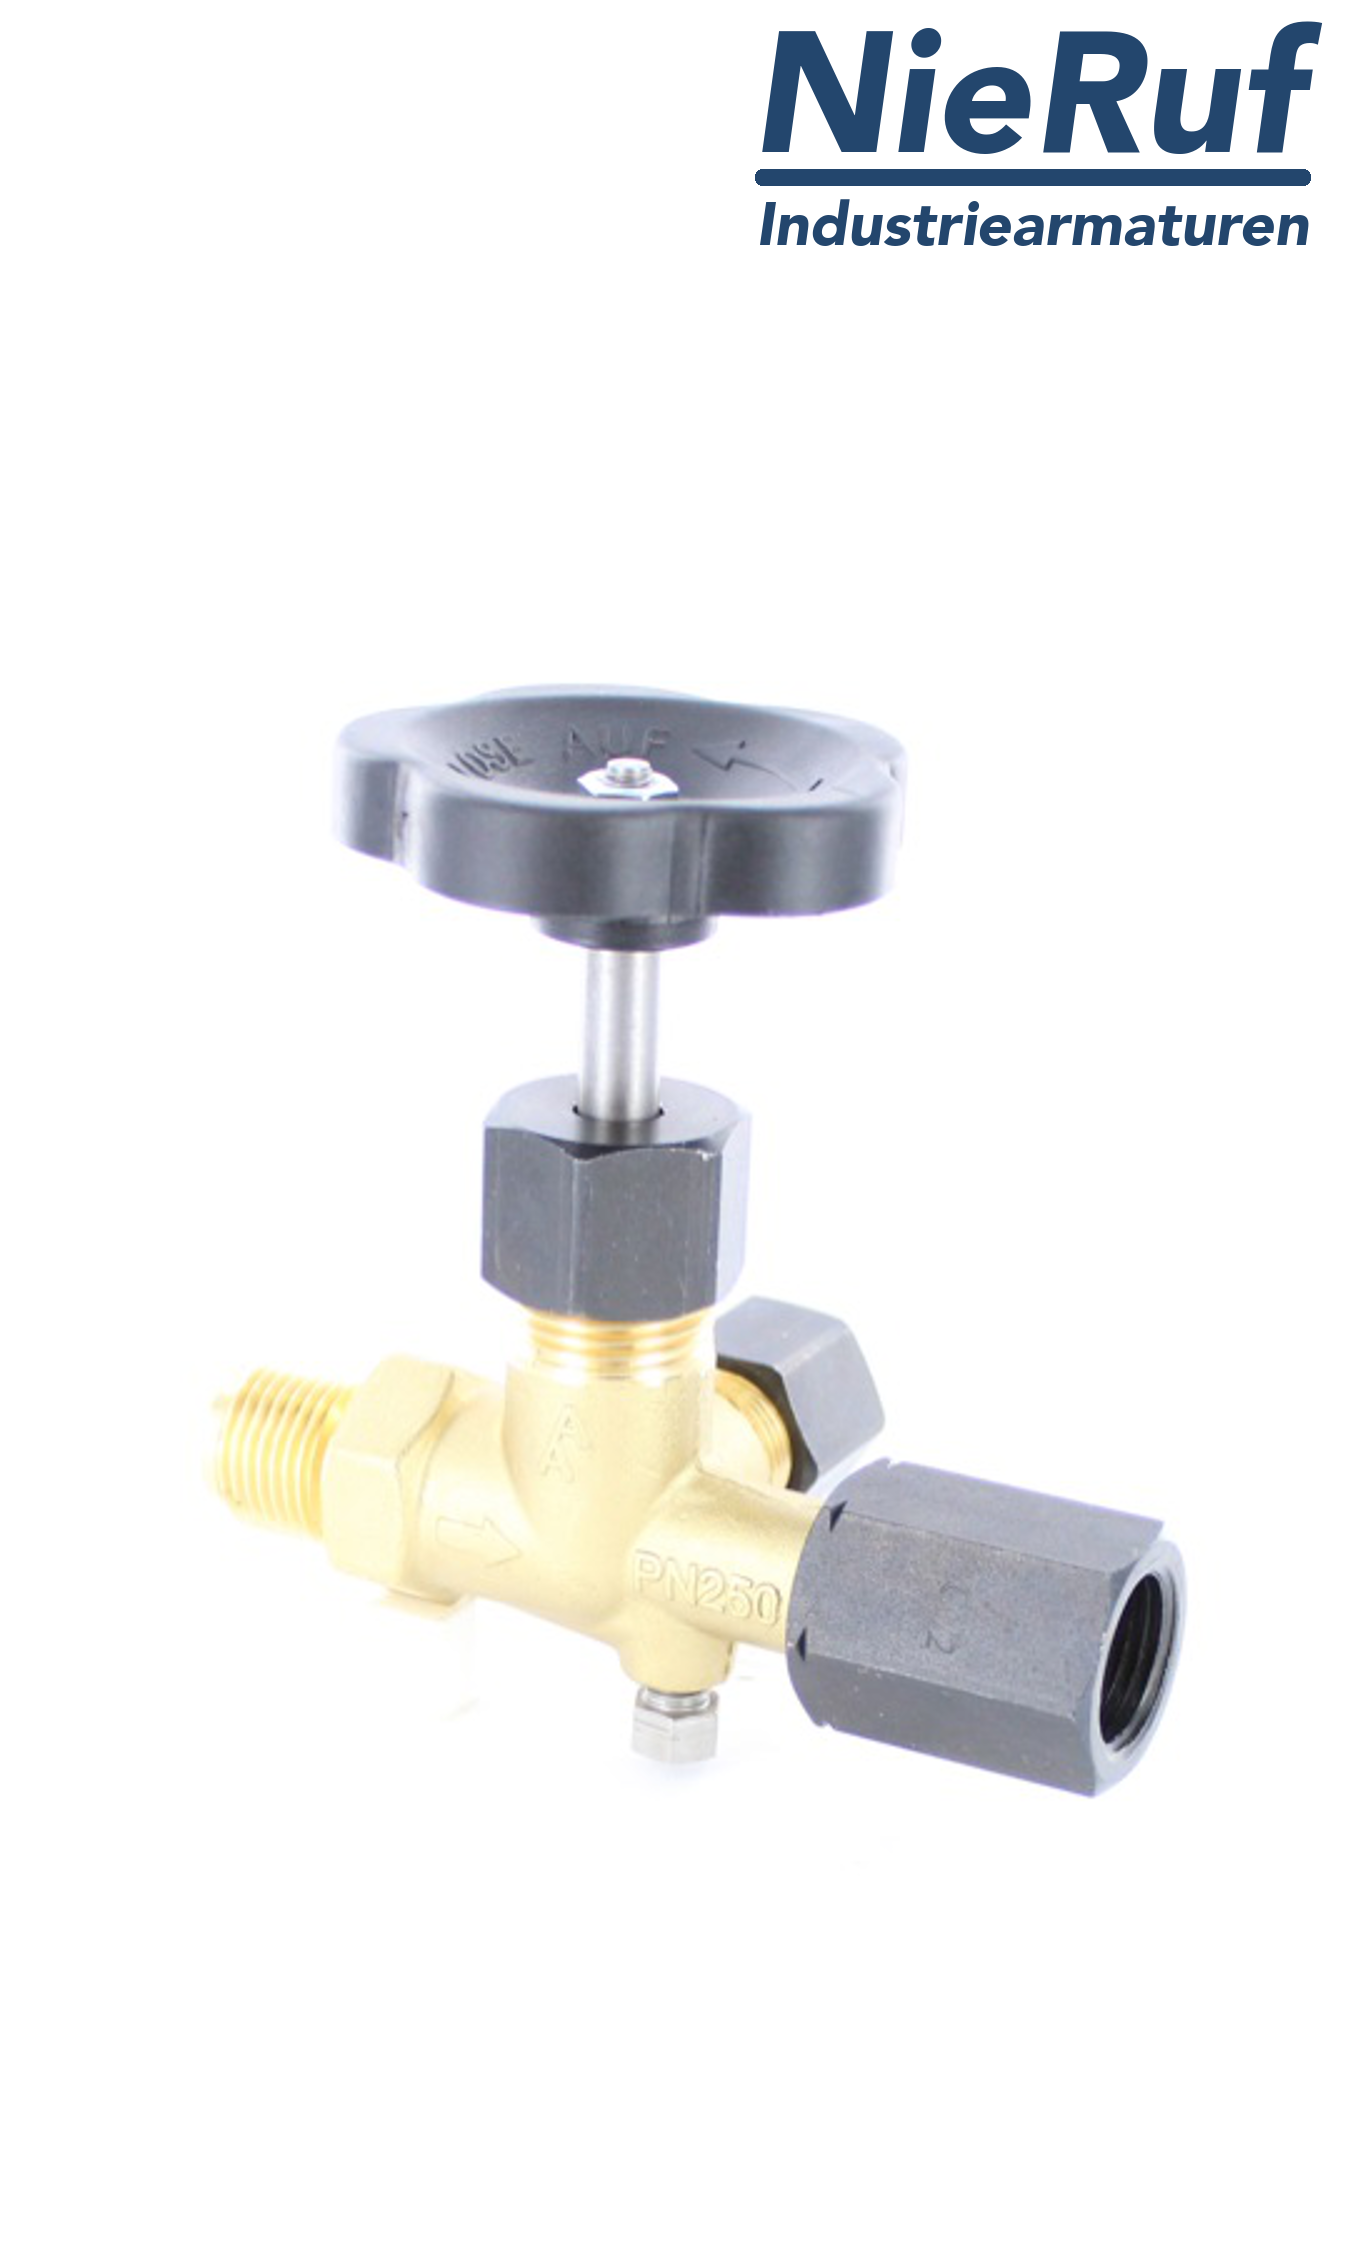 manometer gauge valves male thread x adapter for instrument holder with nut adjustable x test connector M20x1,5 DIN 16271 brass 250 bar